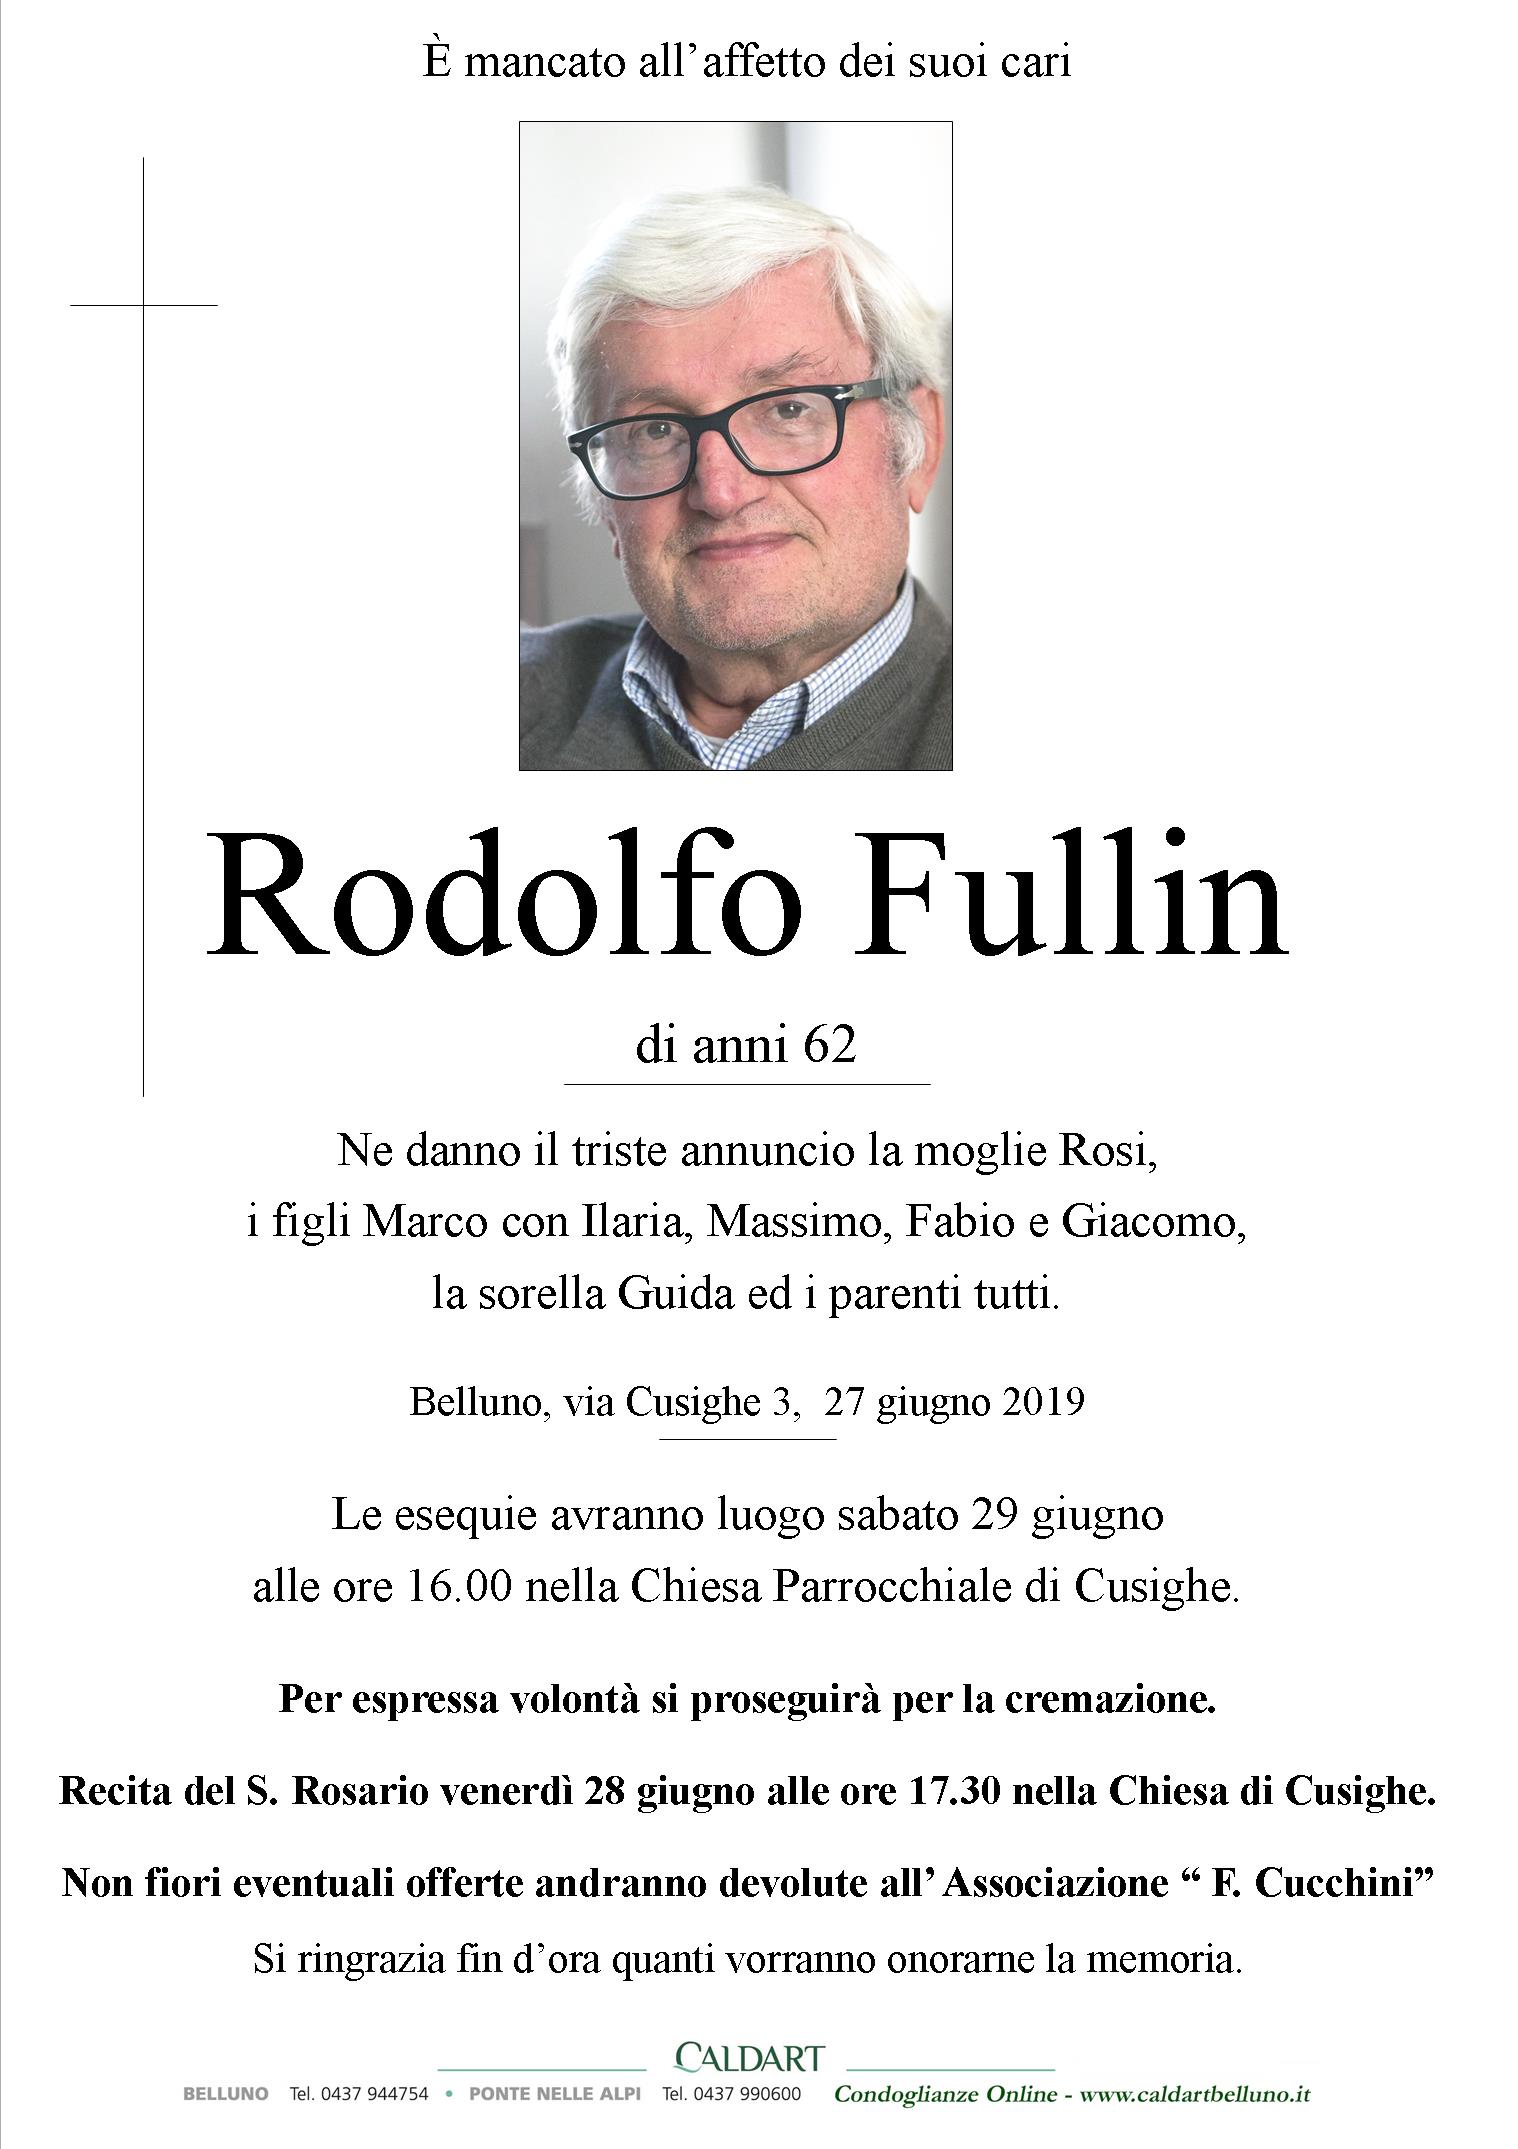 Fullin Rodolfo